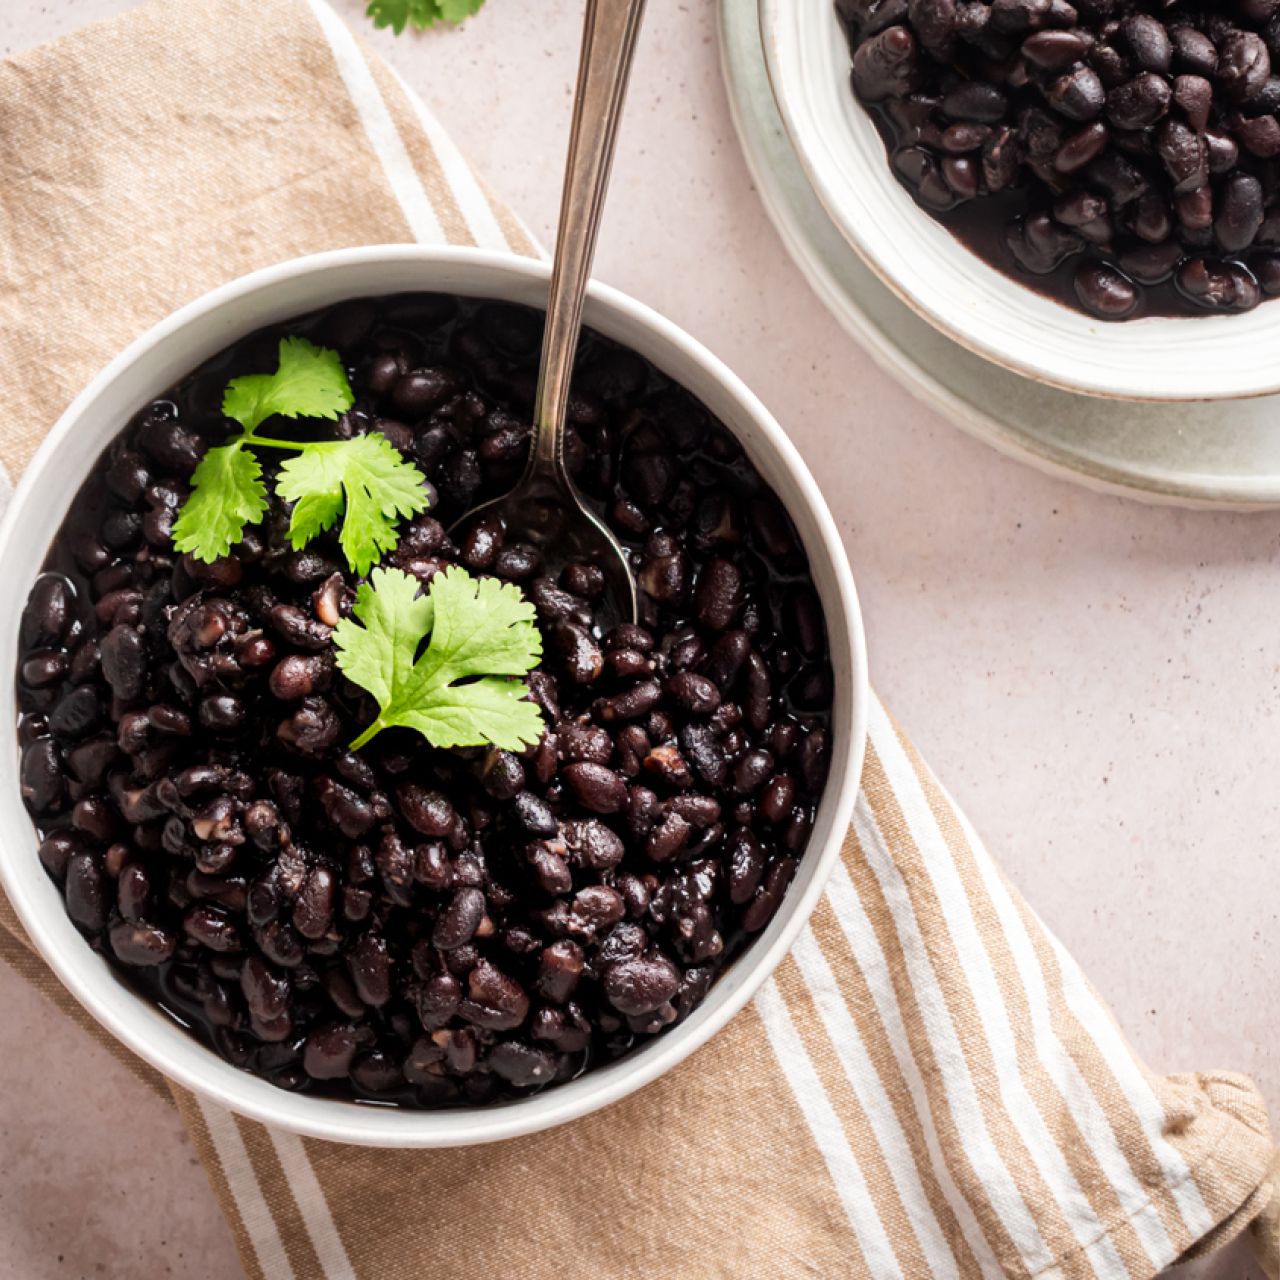 How to cook black beans in the crock pot - crock pot black beans recipe